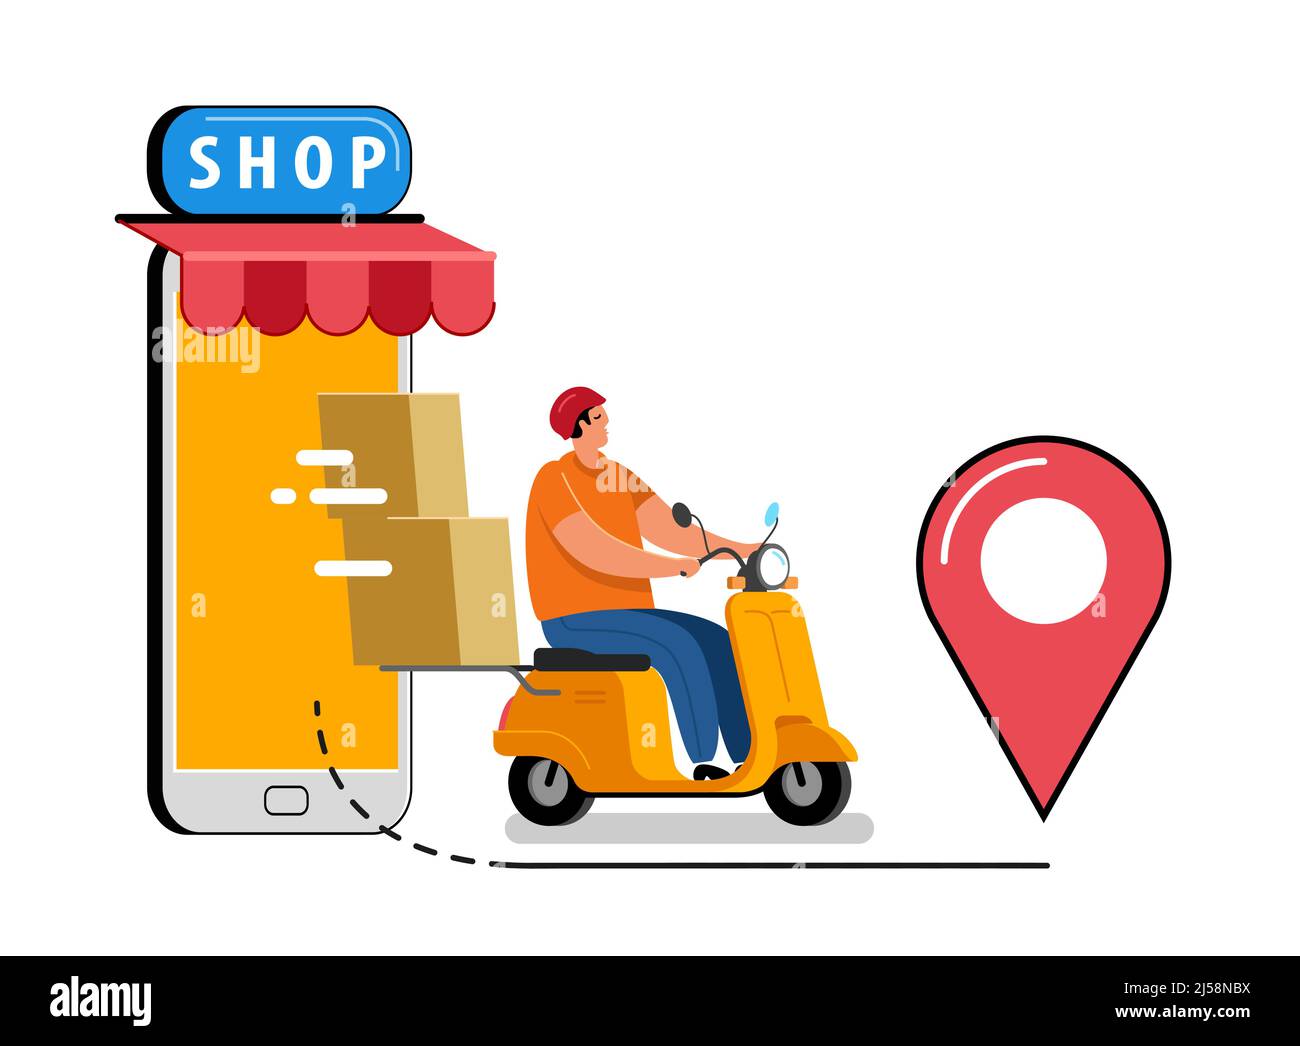 Online Delivery Service Konzept, Lieferung nach Hause oder ins Büro. Kurier, Lieferer fährt Roller liefern Paket Stock Vektor